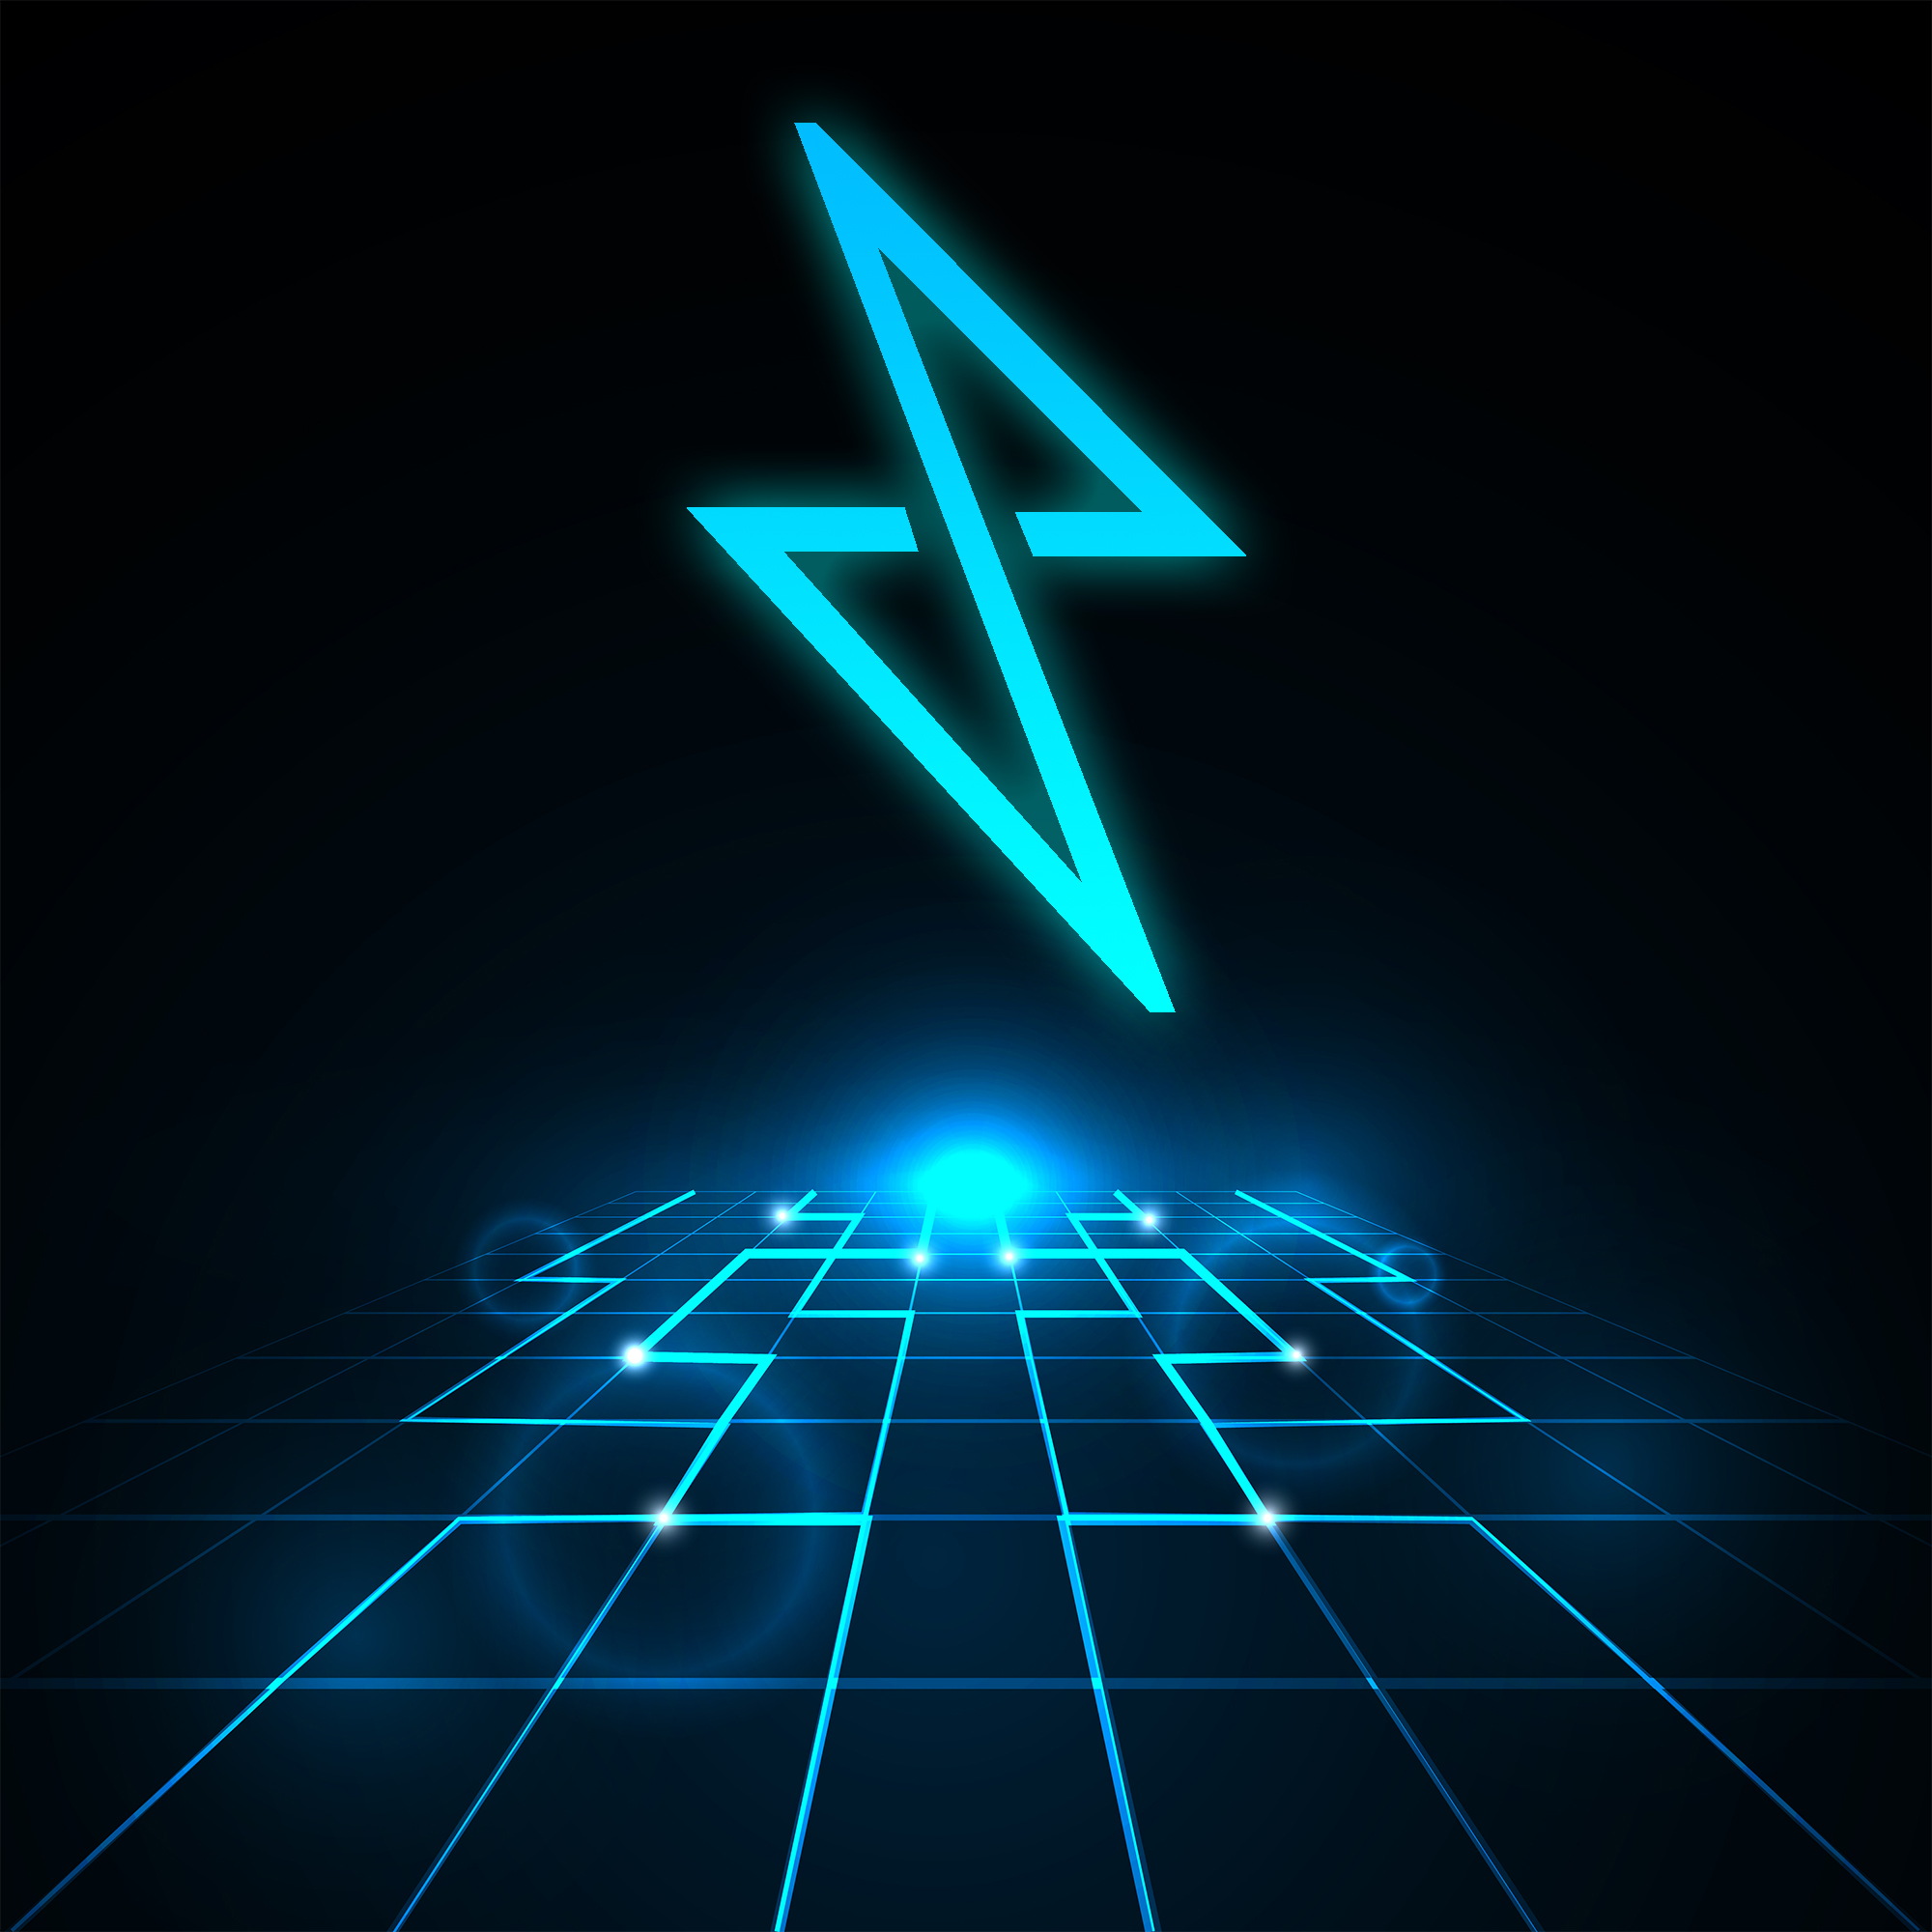 A blue lightning bolt, stylistically designed over a TRON-inspired digital background